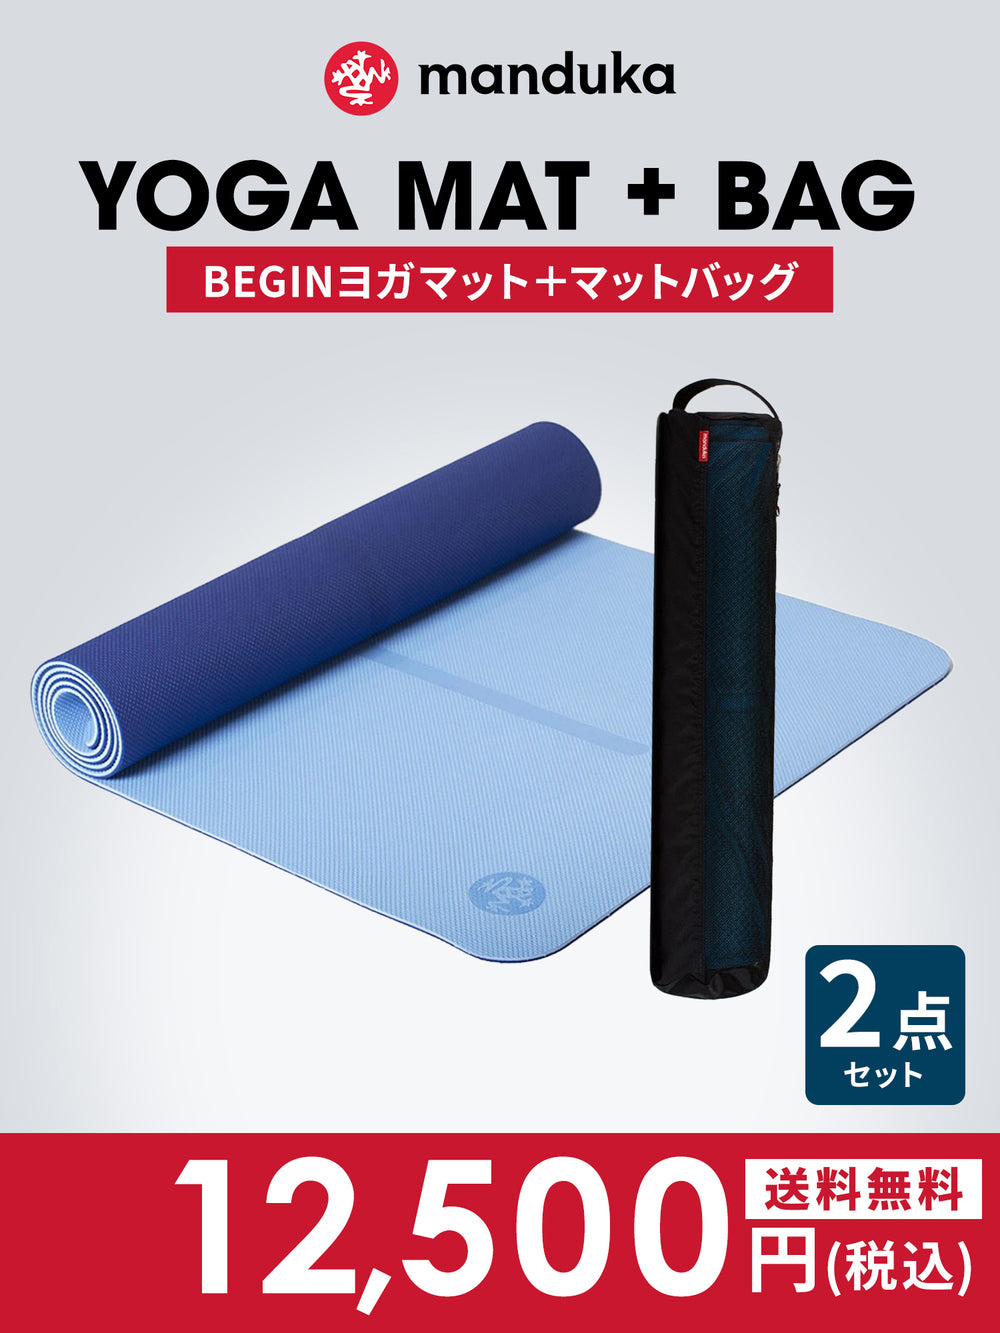 Manduka] [Yoga starter 2-piece set] / Begin Begin Yoga Mat (5mm